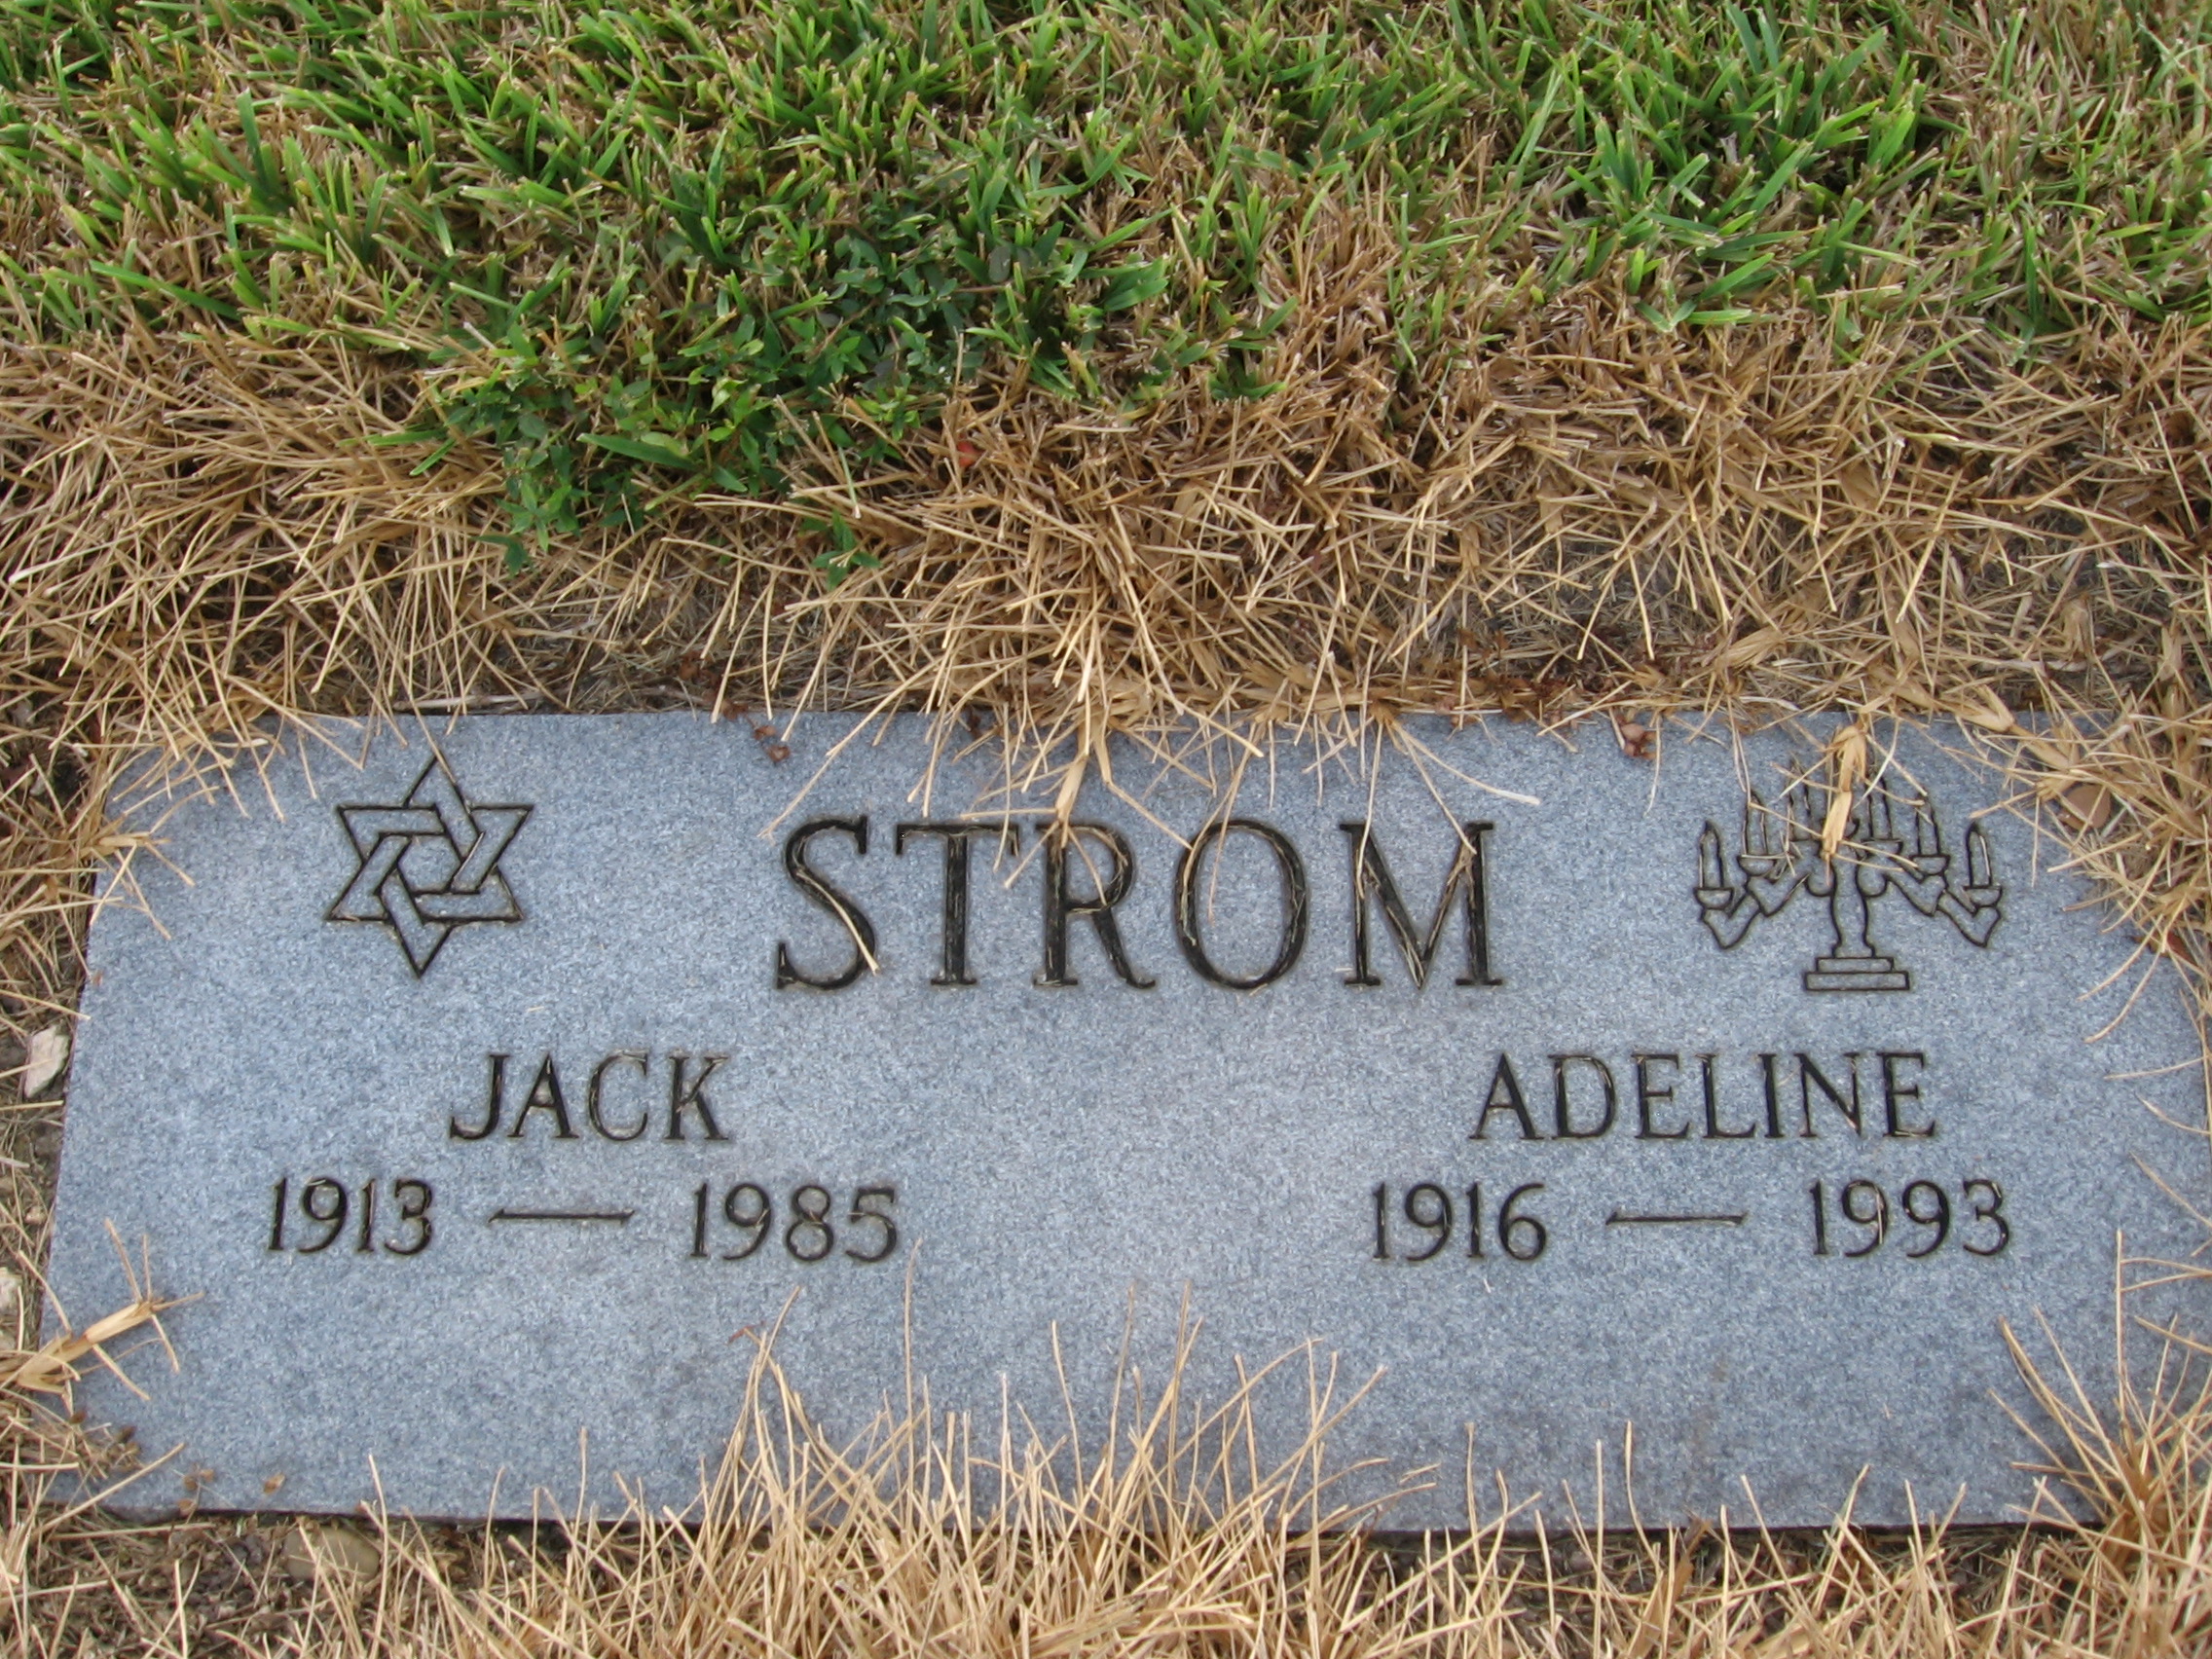 Jack Strom